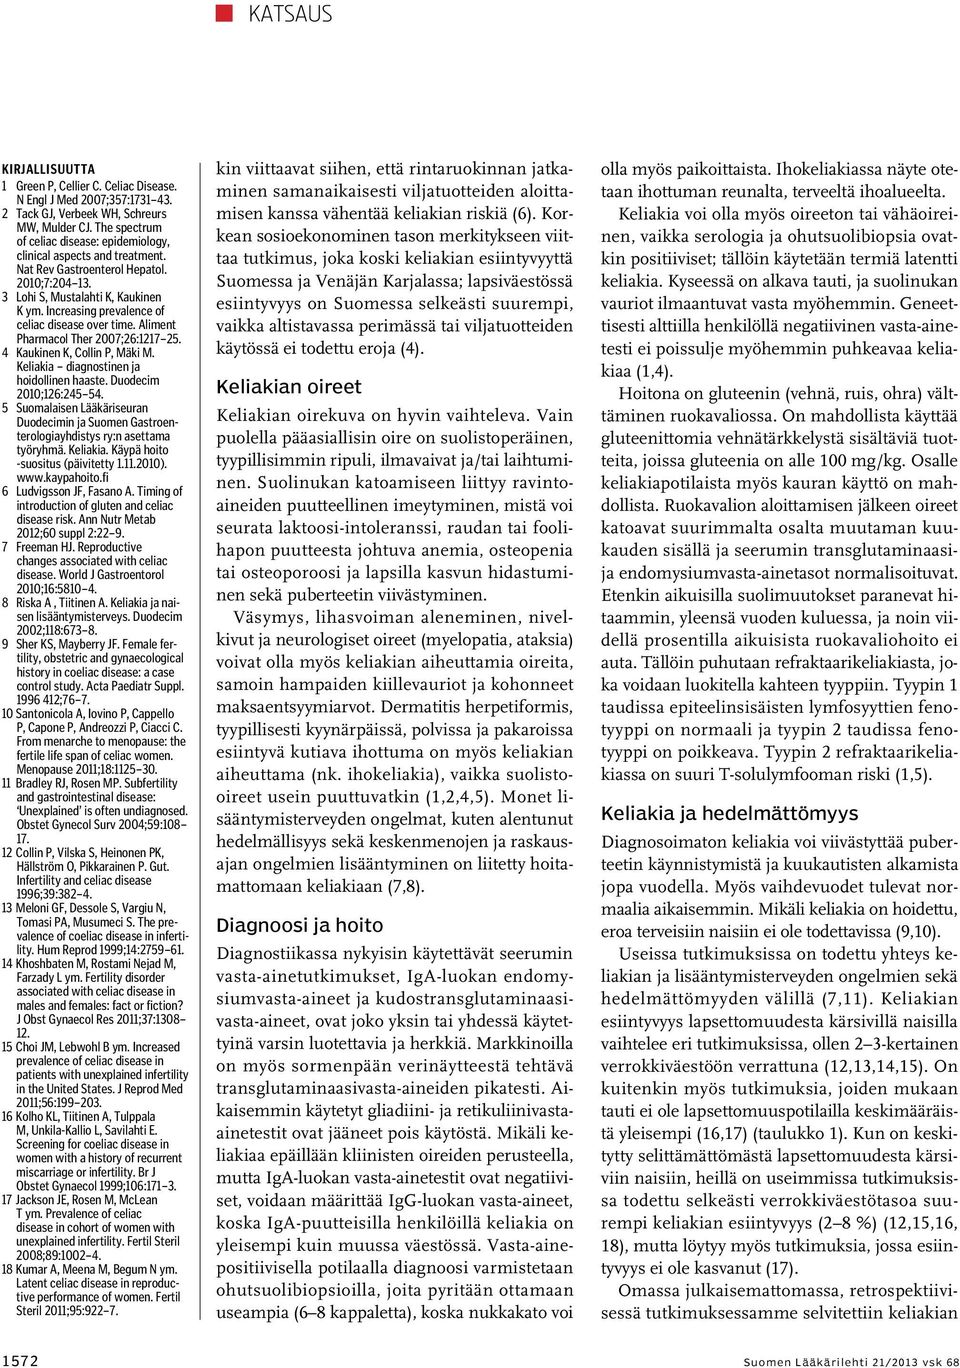 Increasing prevalence of celiac disease over time. Aliment Pharmacol Ther 2007;26:1217 25. 4 Kaukinen K, Collin P, Mäki M. Keliakia diagnostinen ja hoidollinen haaste. Duodecim 2010;126:245 54.